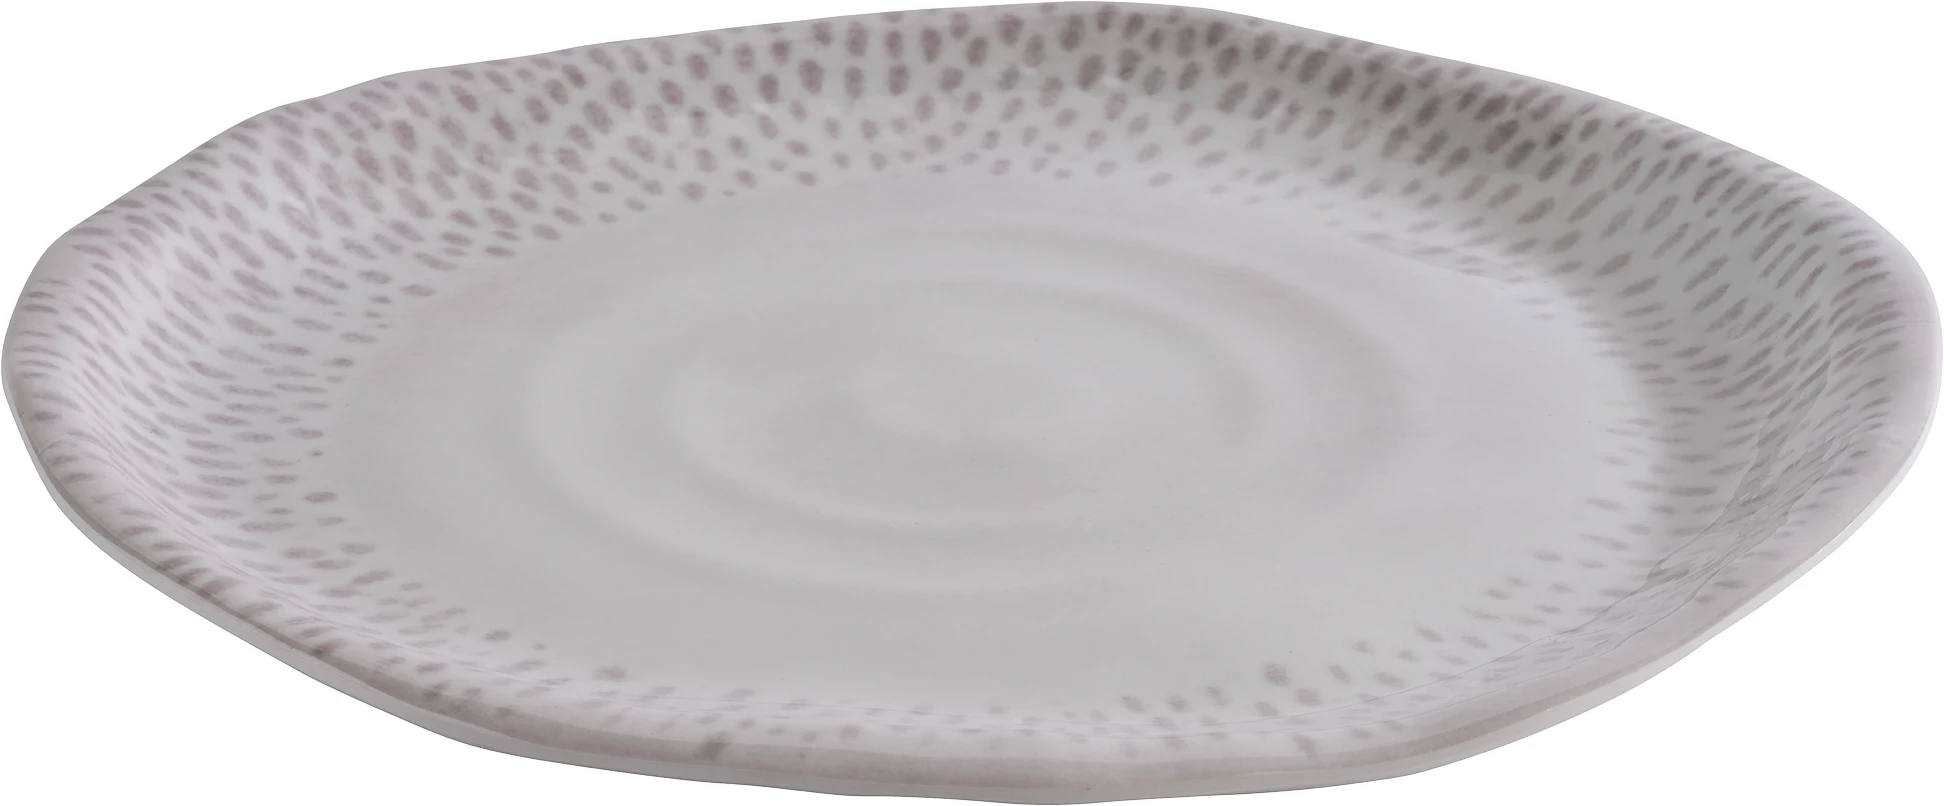 APS Footmark flad tallerken, hvid/grå, ø26,5 cm